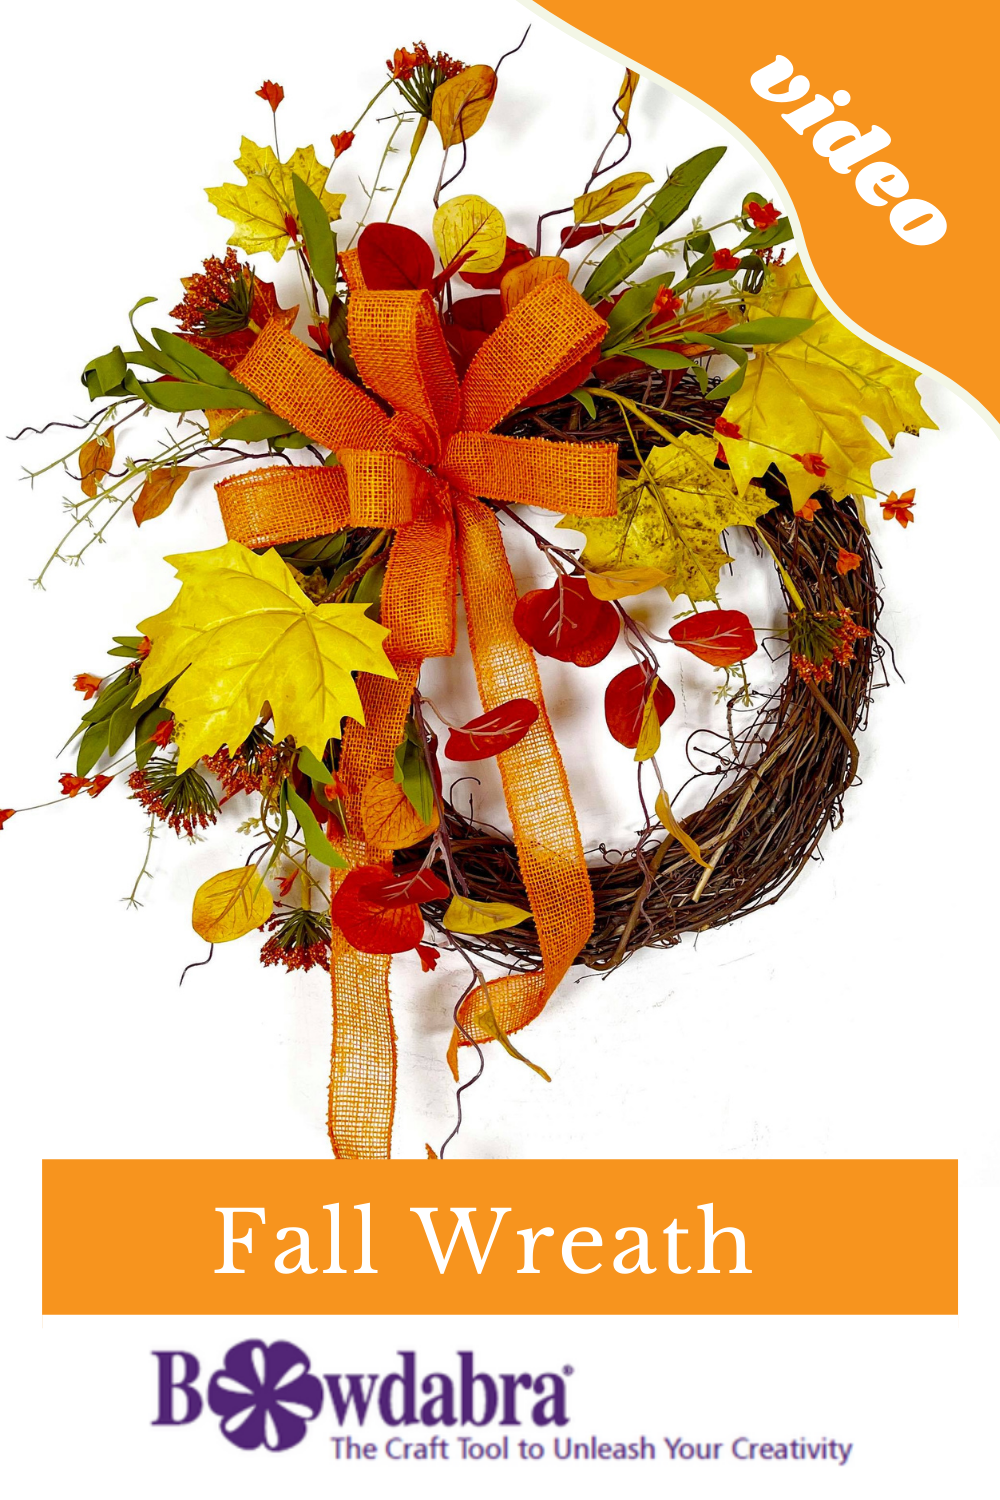 Beautiful Fall wreath